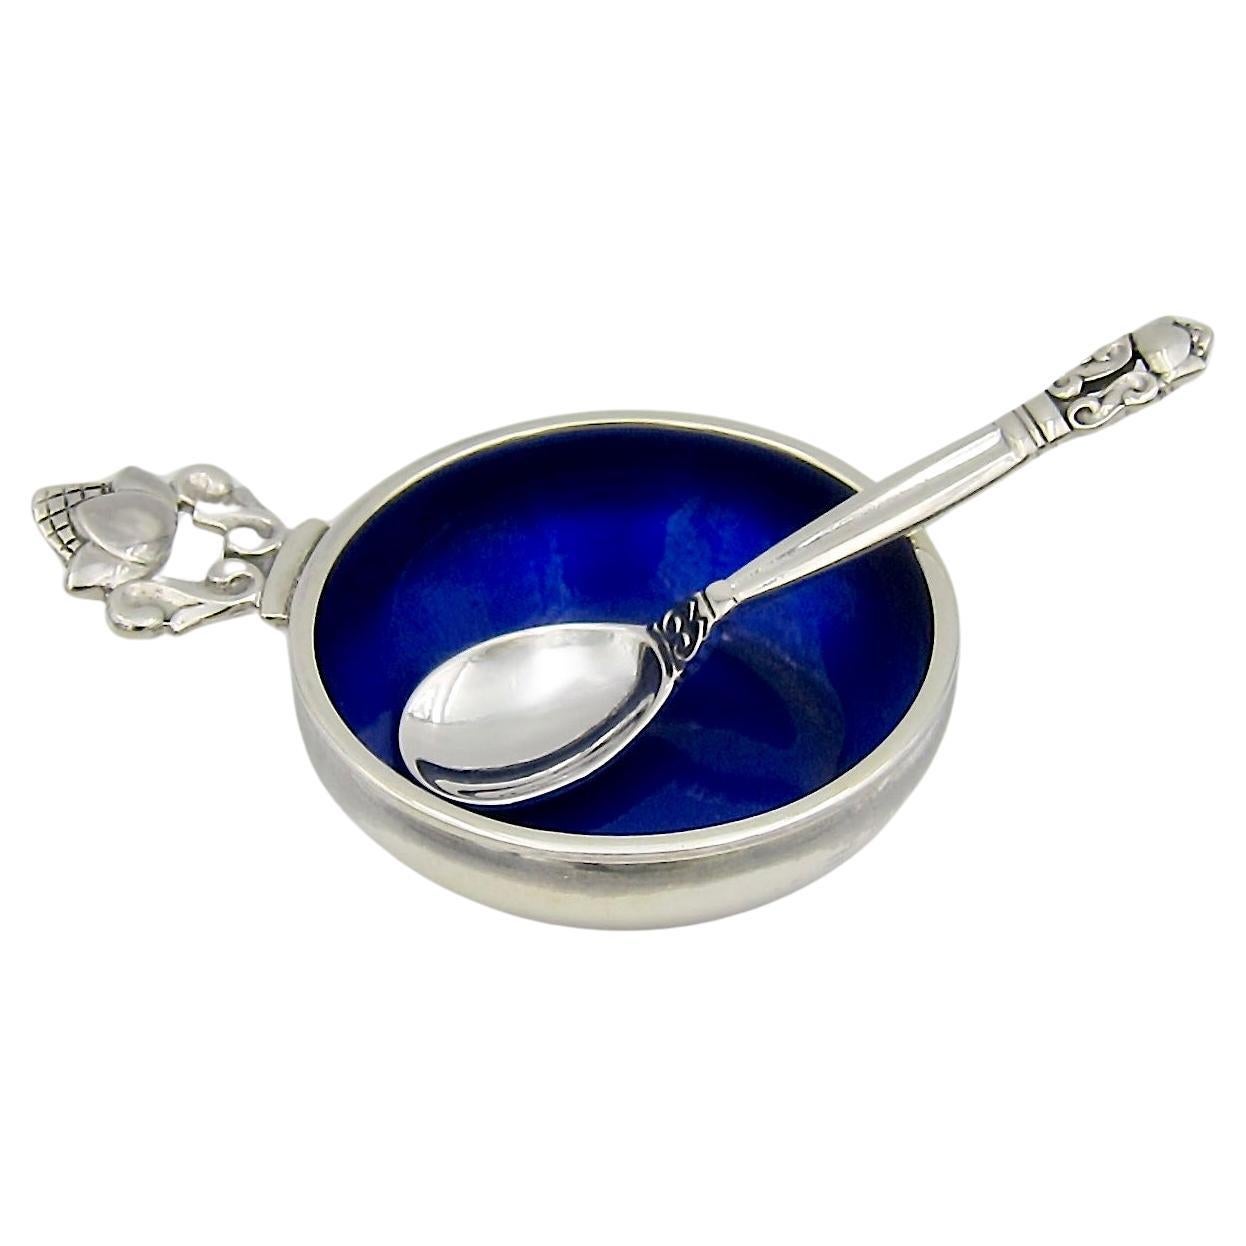 Georg Jensen Acorn Sterling Silver and Blue Enamel Salt Cellar with Spoon